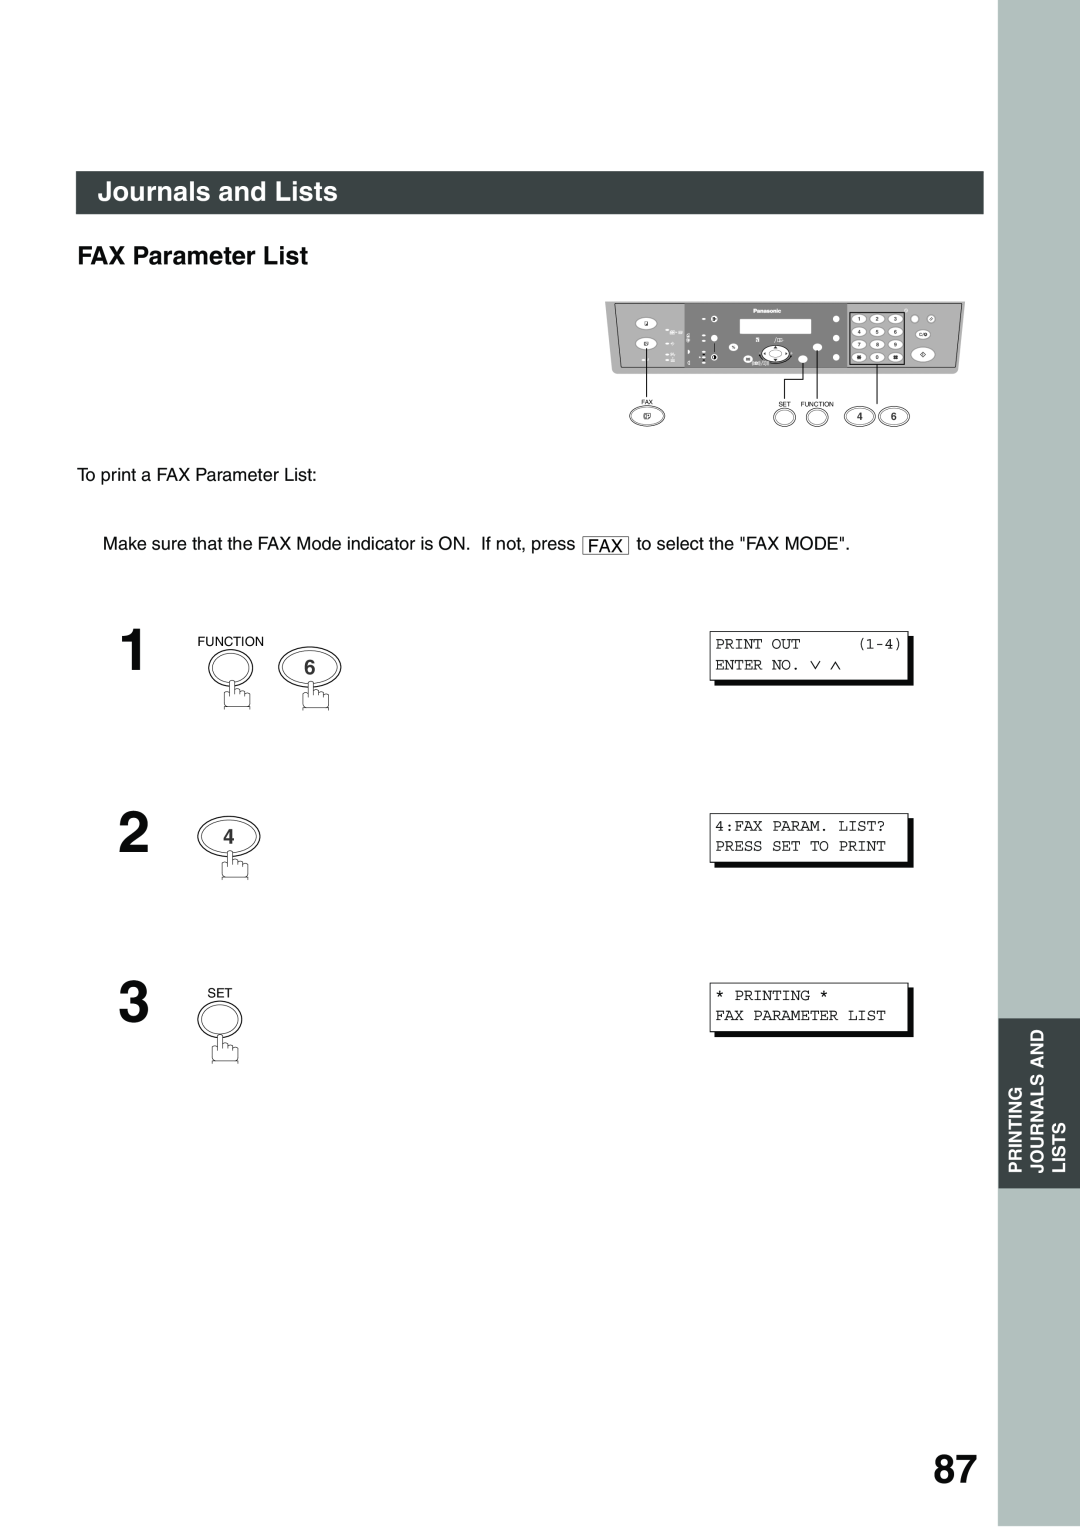 Panasonic DP-135FP FAX Parameter List, Journals and Lists, Enter, 4FAX PARAM. LIST?, Press Set To Print, Printing 